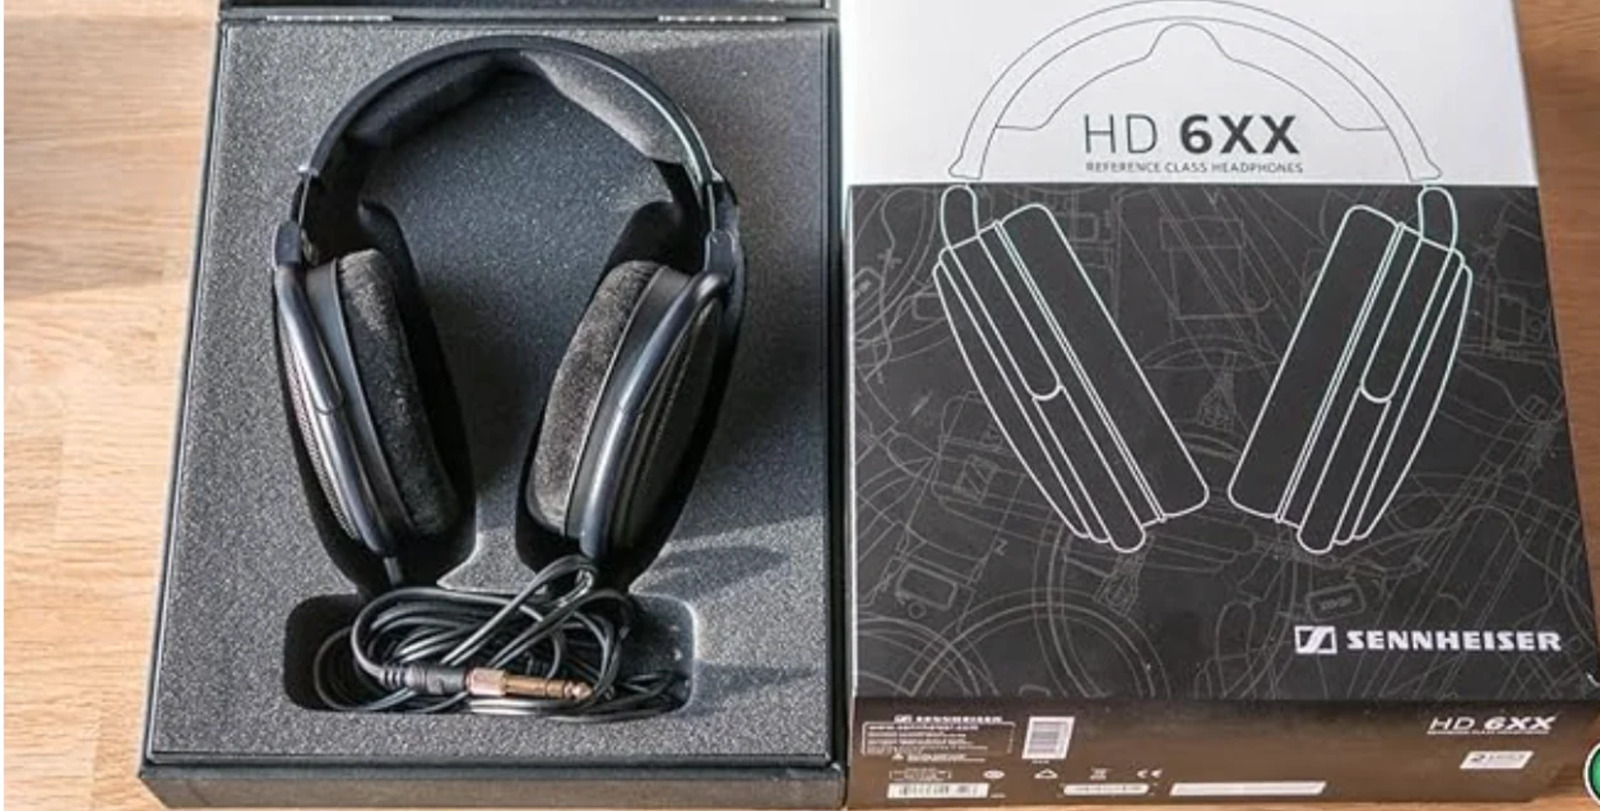 Sennheiser HD 6XX headphones